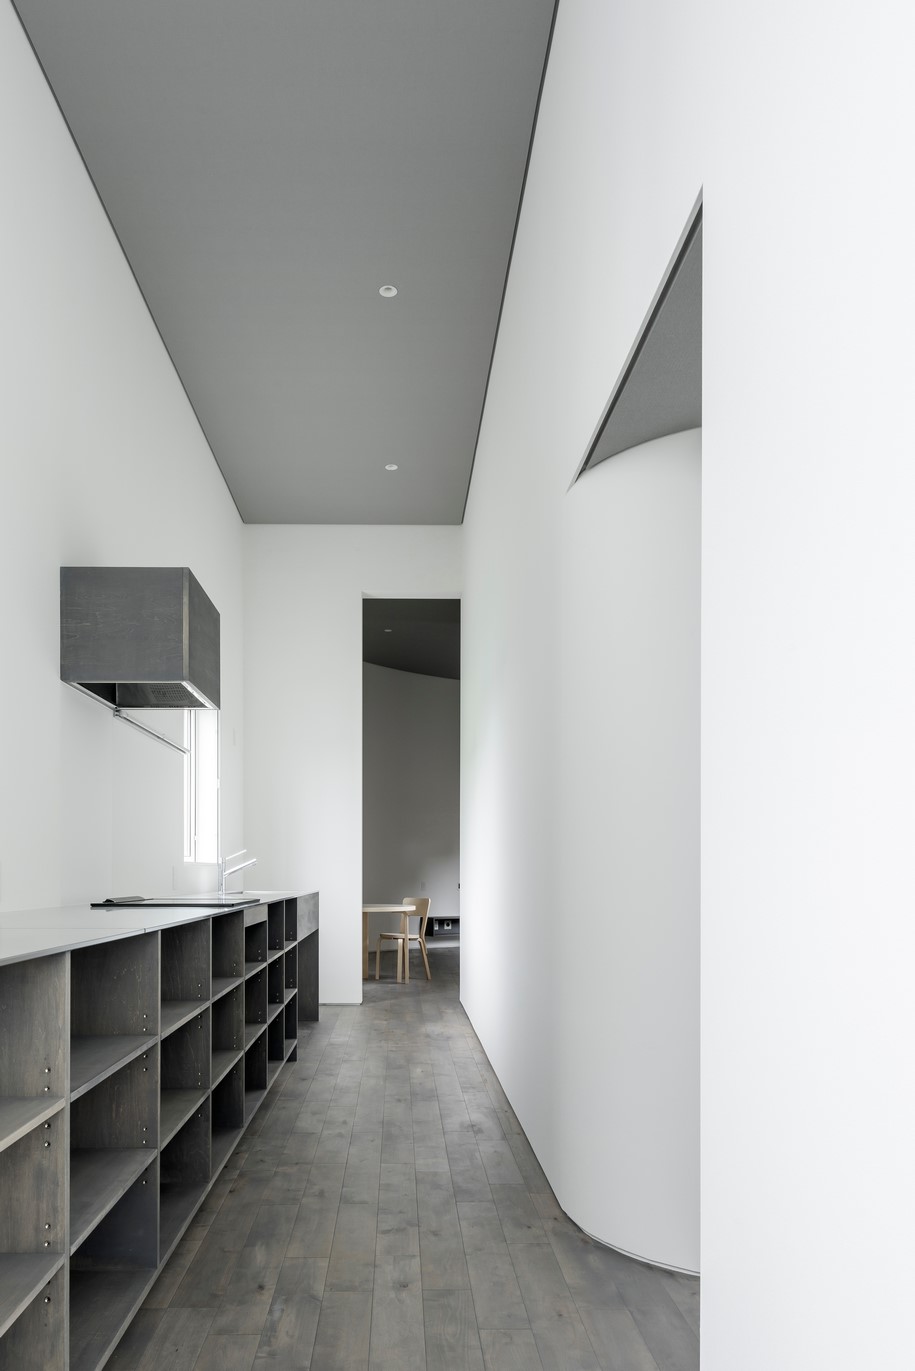 Archisearch Corridor of the Fold   |   Jun Igarashi Architects